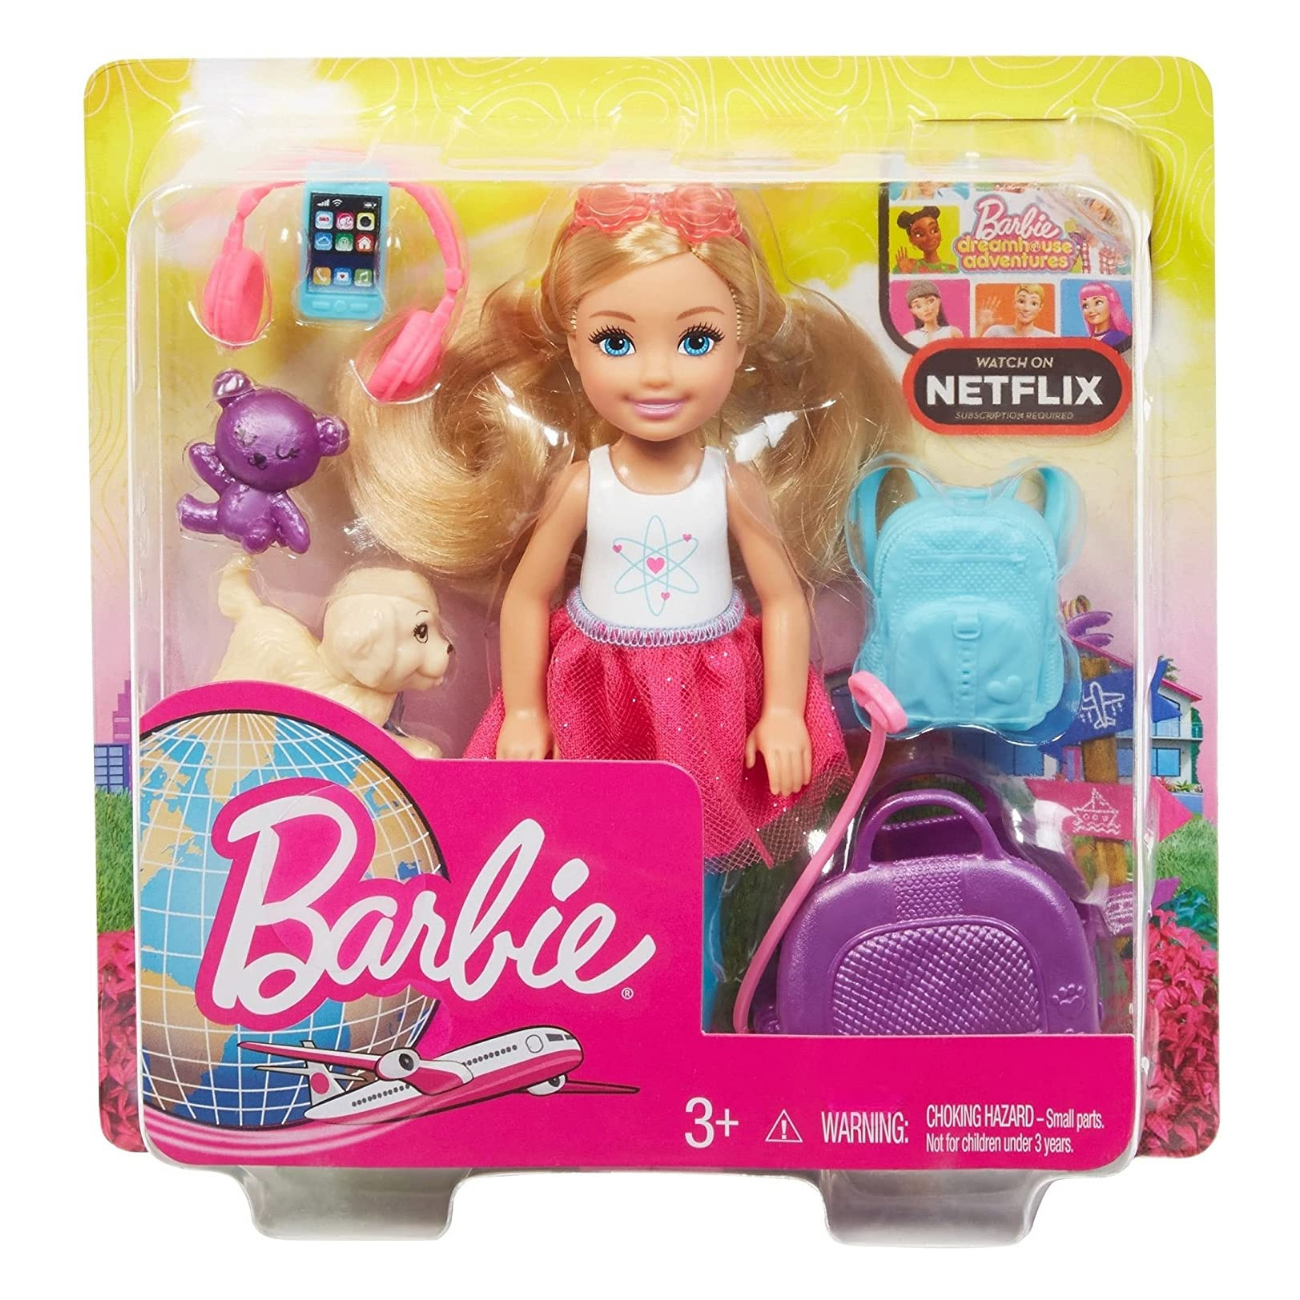 Barbie Chelsea Travel – Child's Play